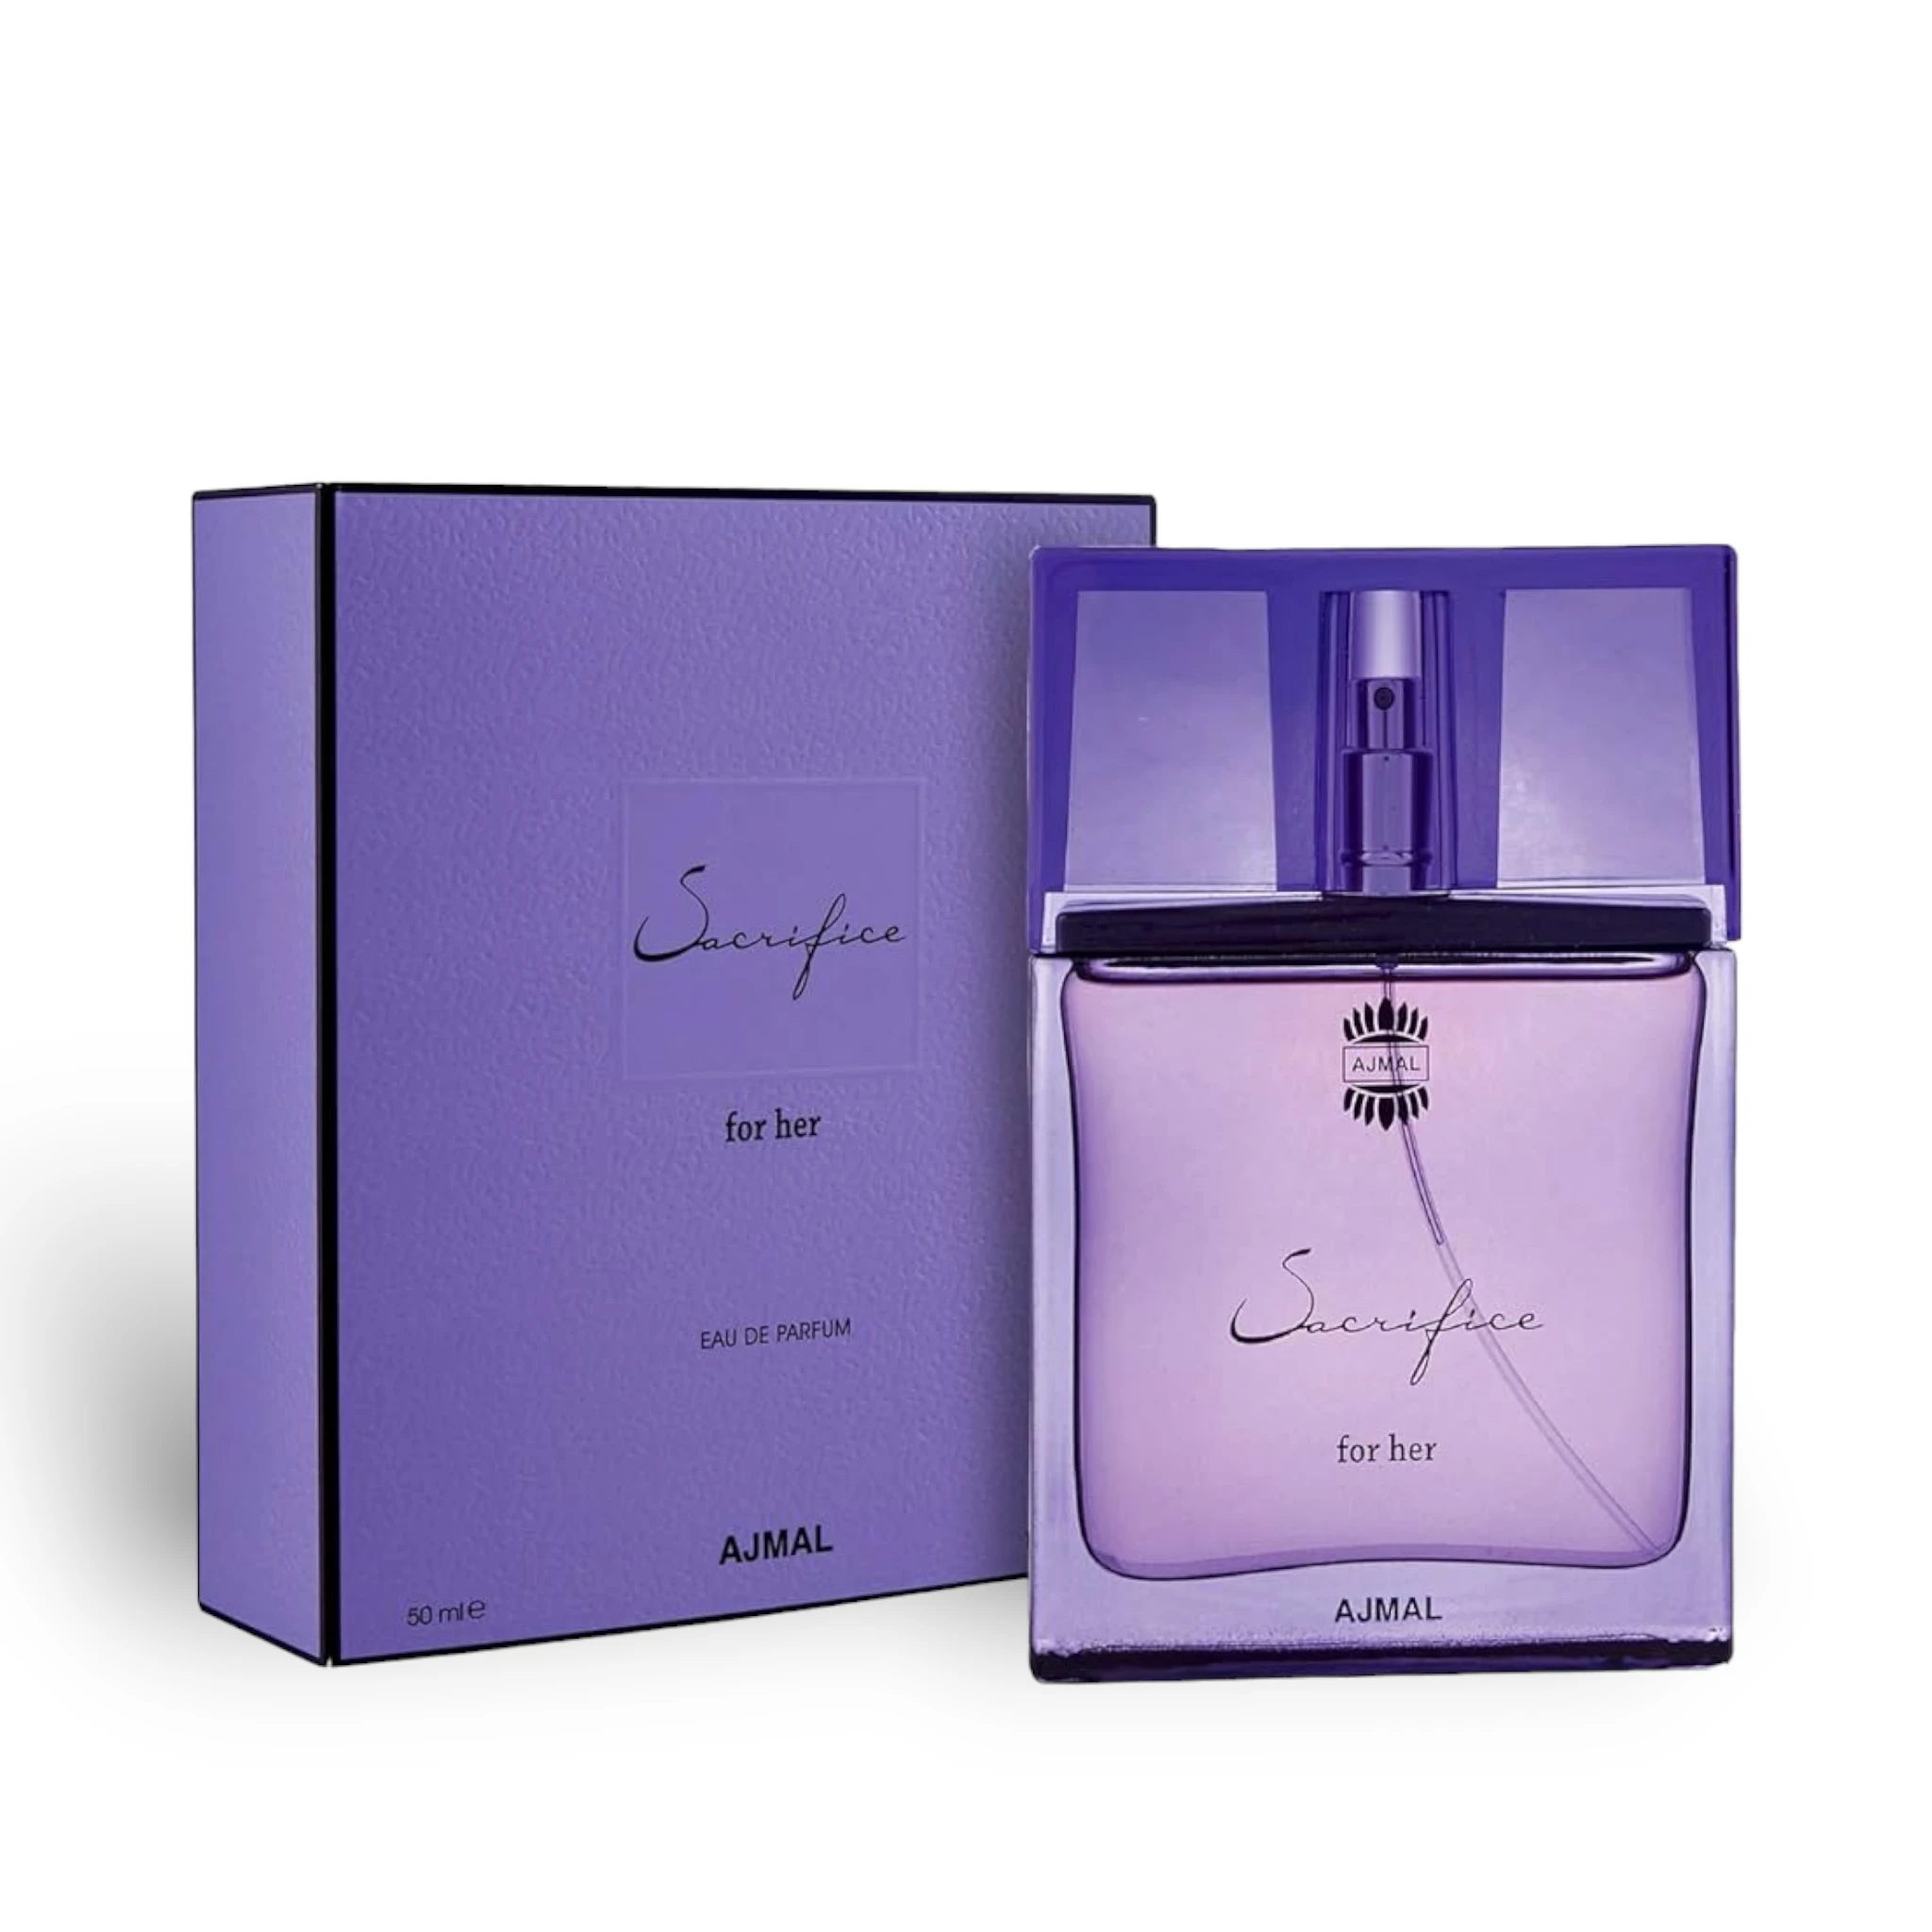 Sacrifice For Her Perfume Eau De Parfum 50Ml By Ajmal